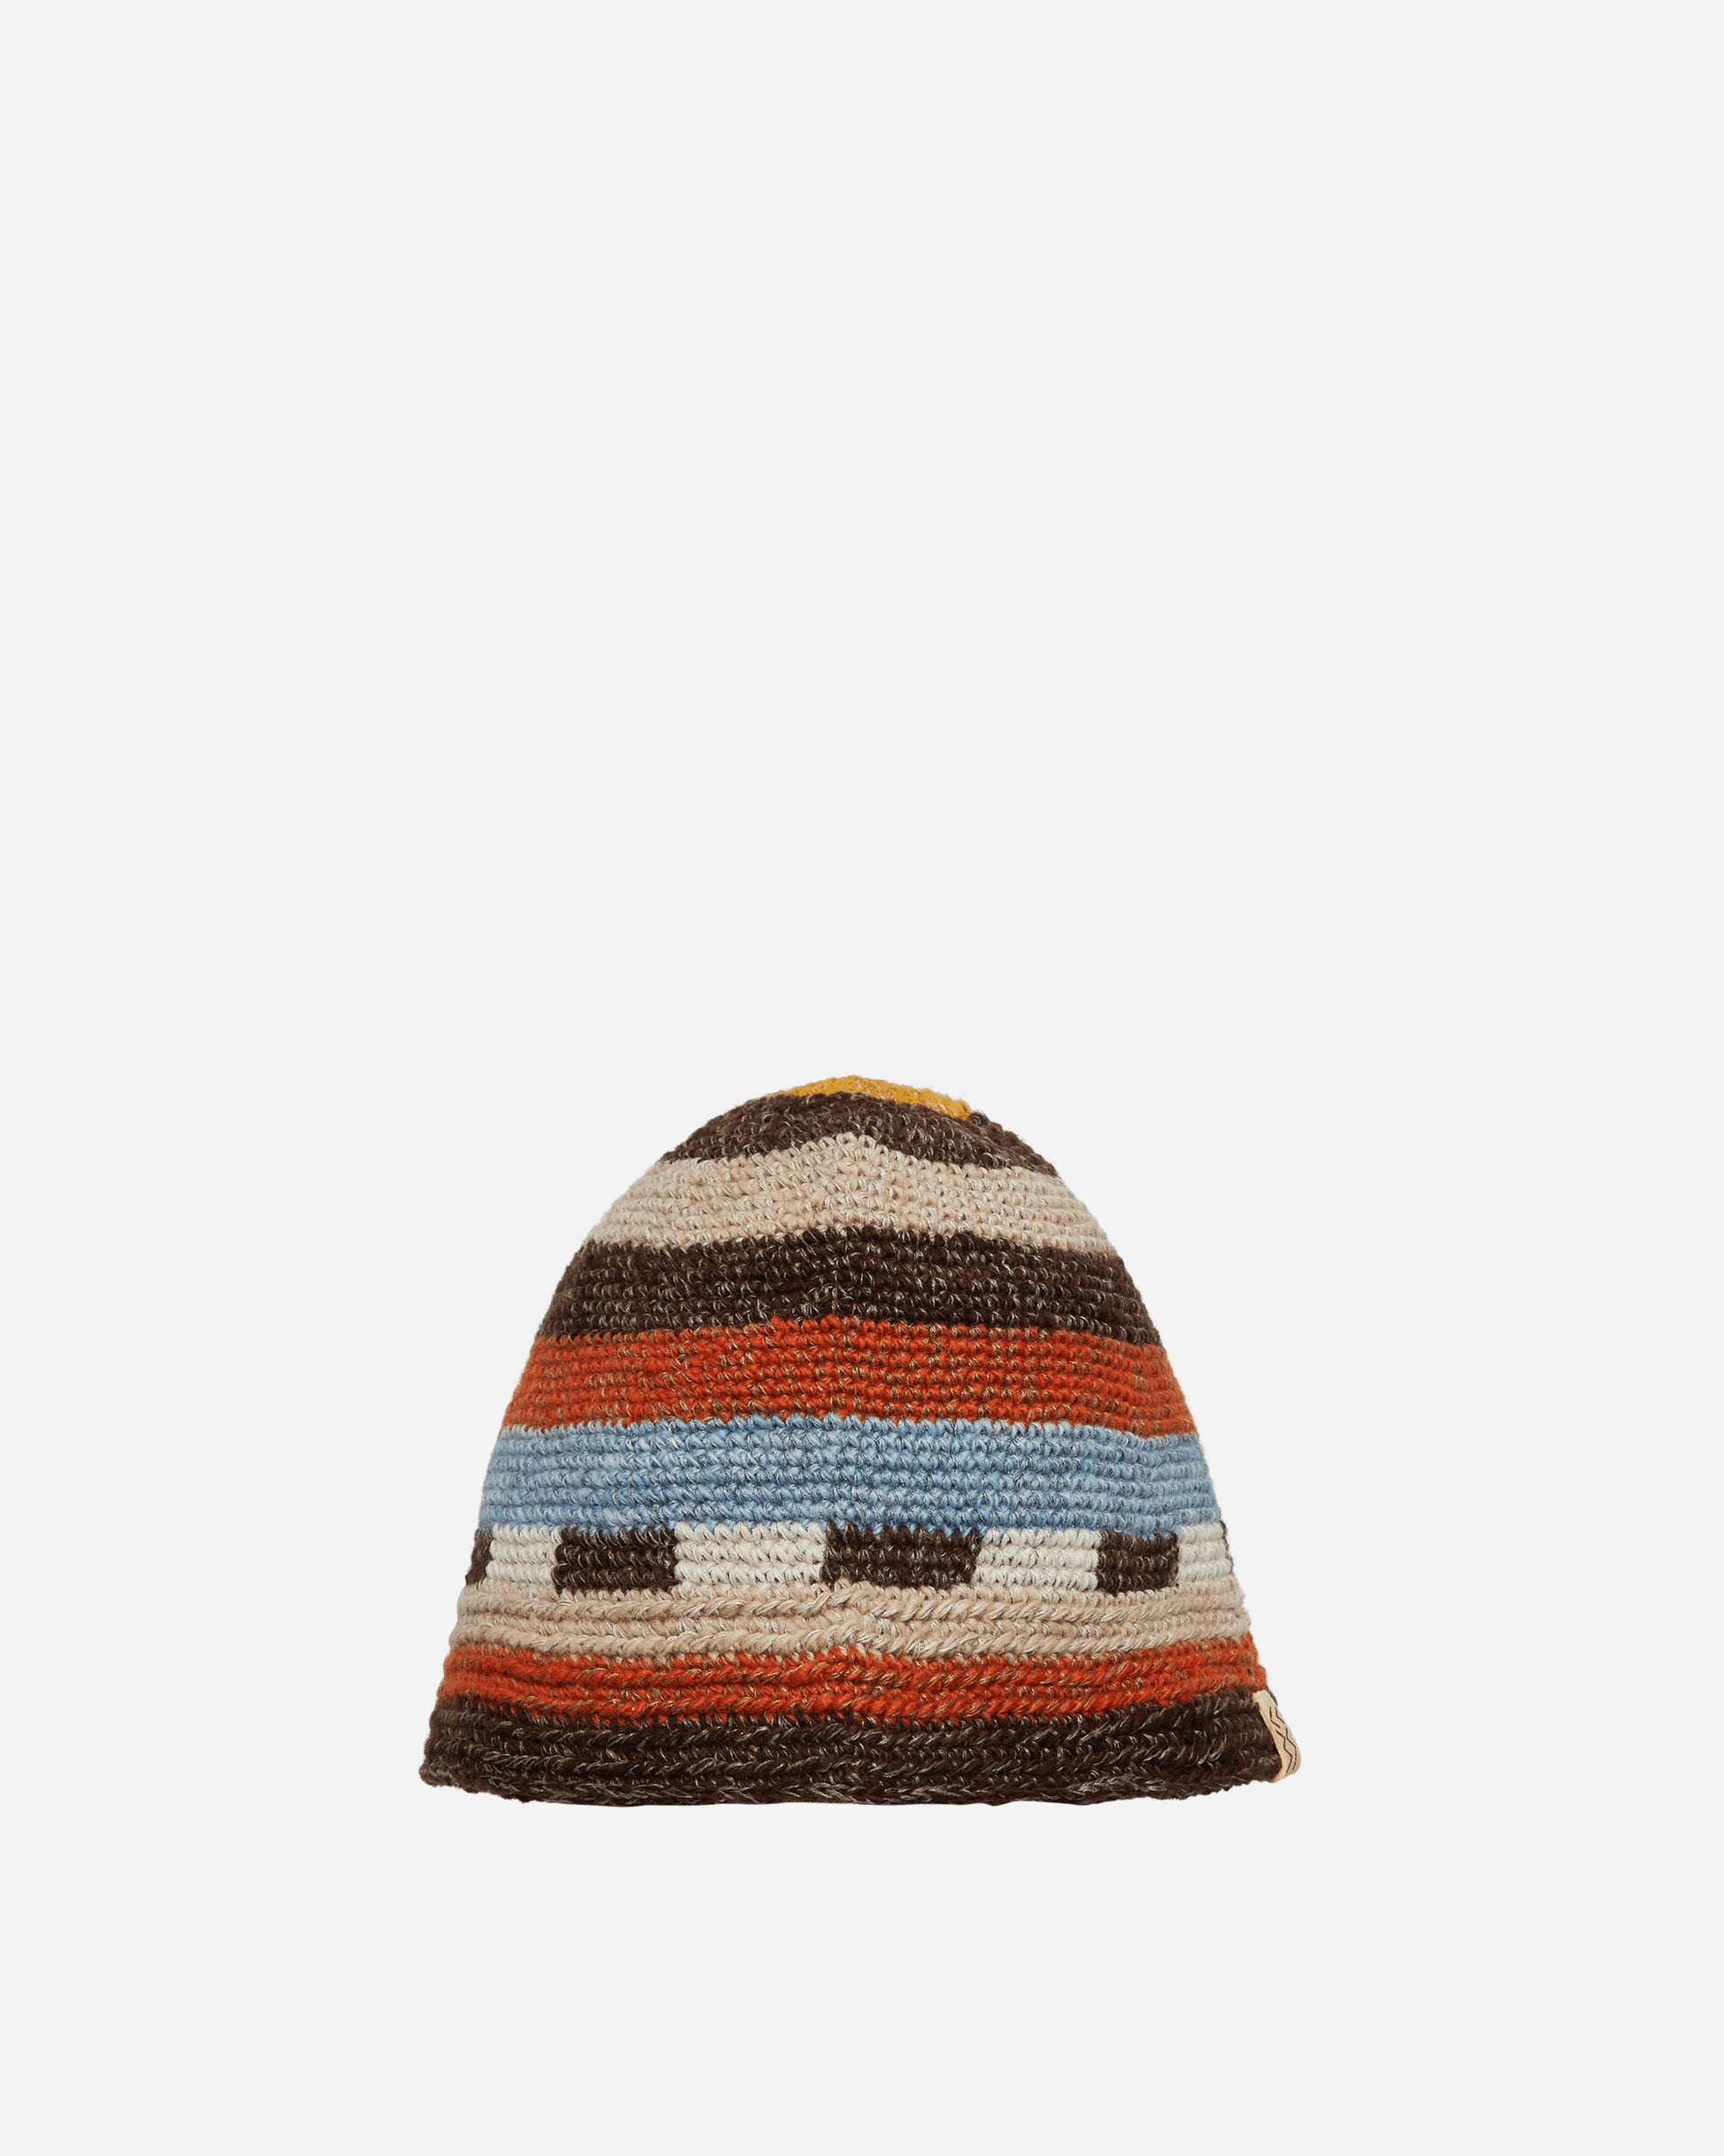 visvim Meda Crochet Knit Hat (N.D.) Multi Hats Beanies 124103003019 001